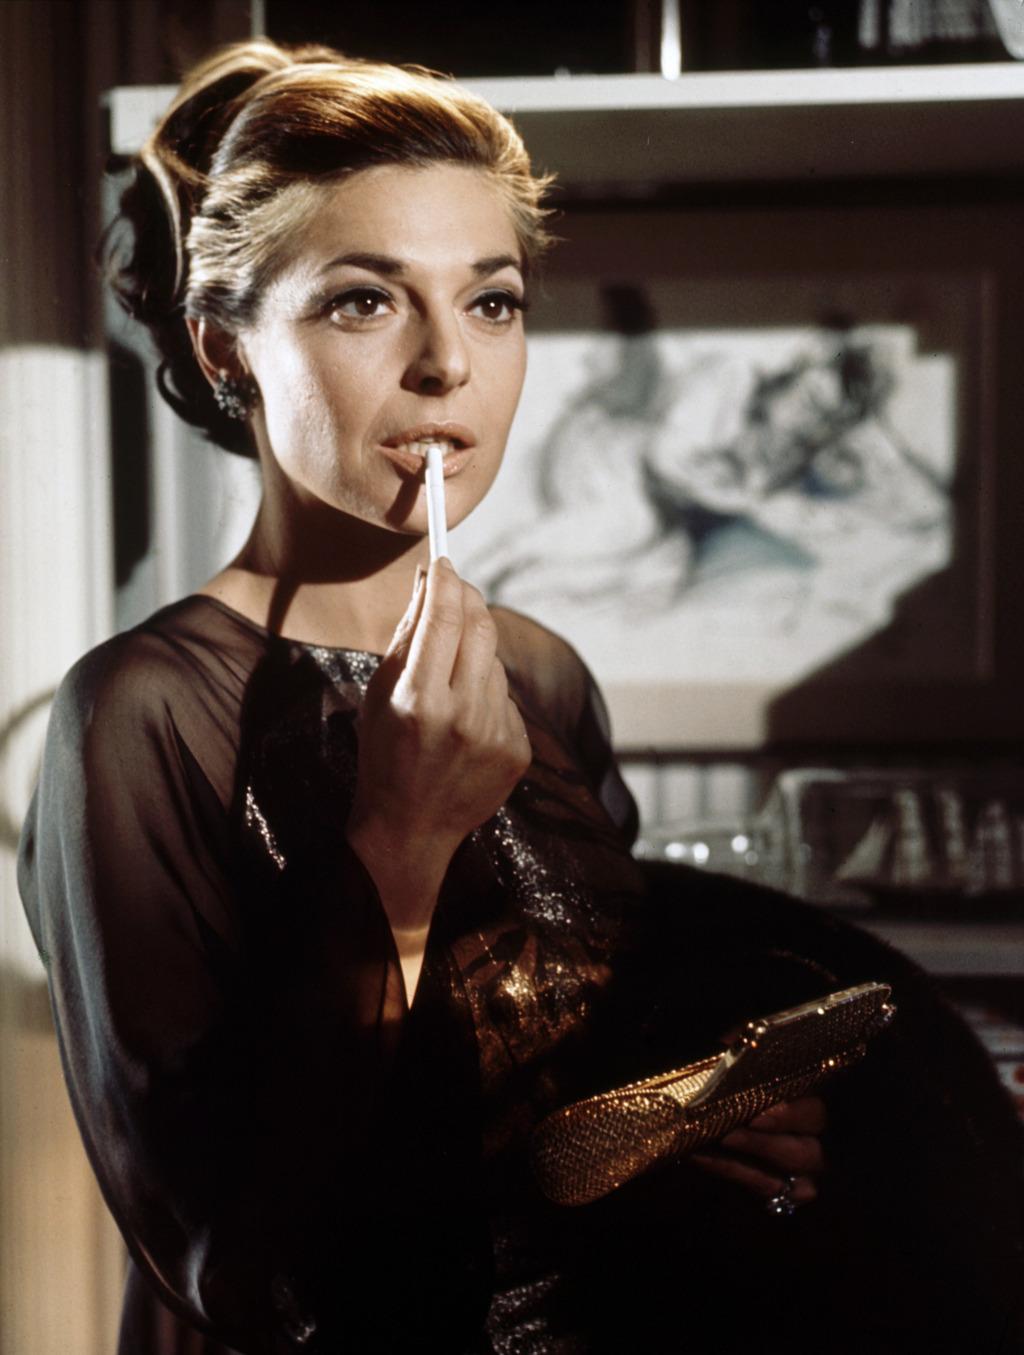 אן בנקרופט בסרט "הבוגר", 1967